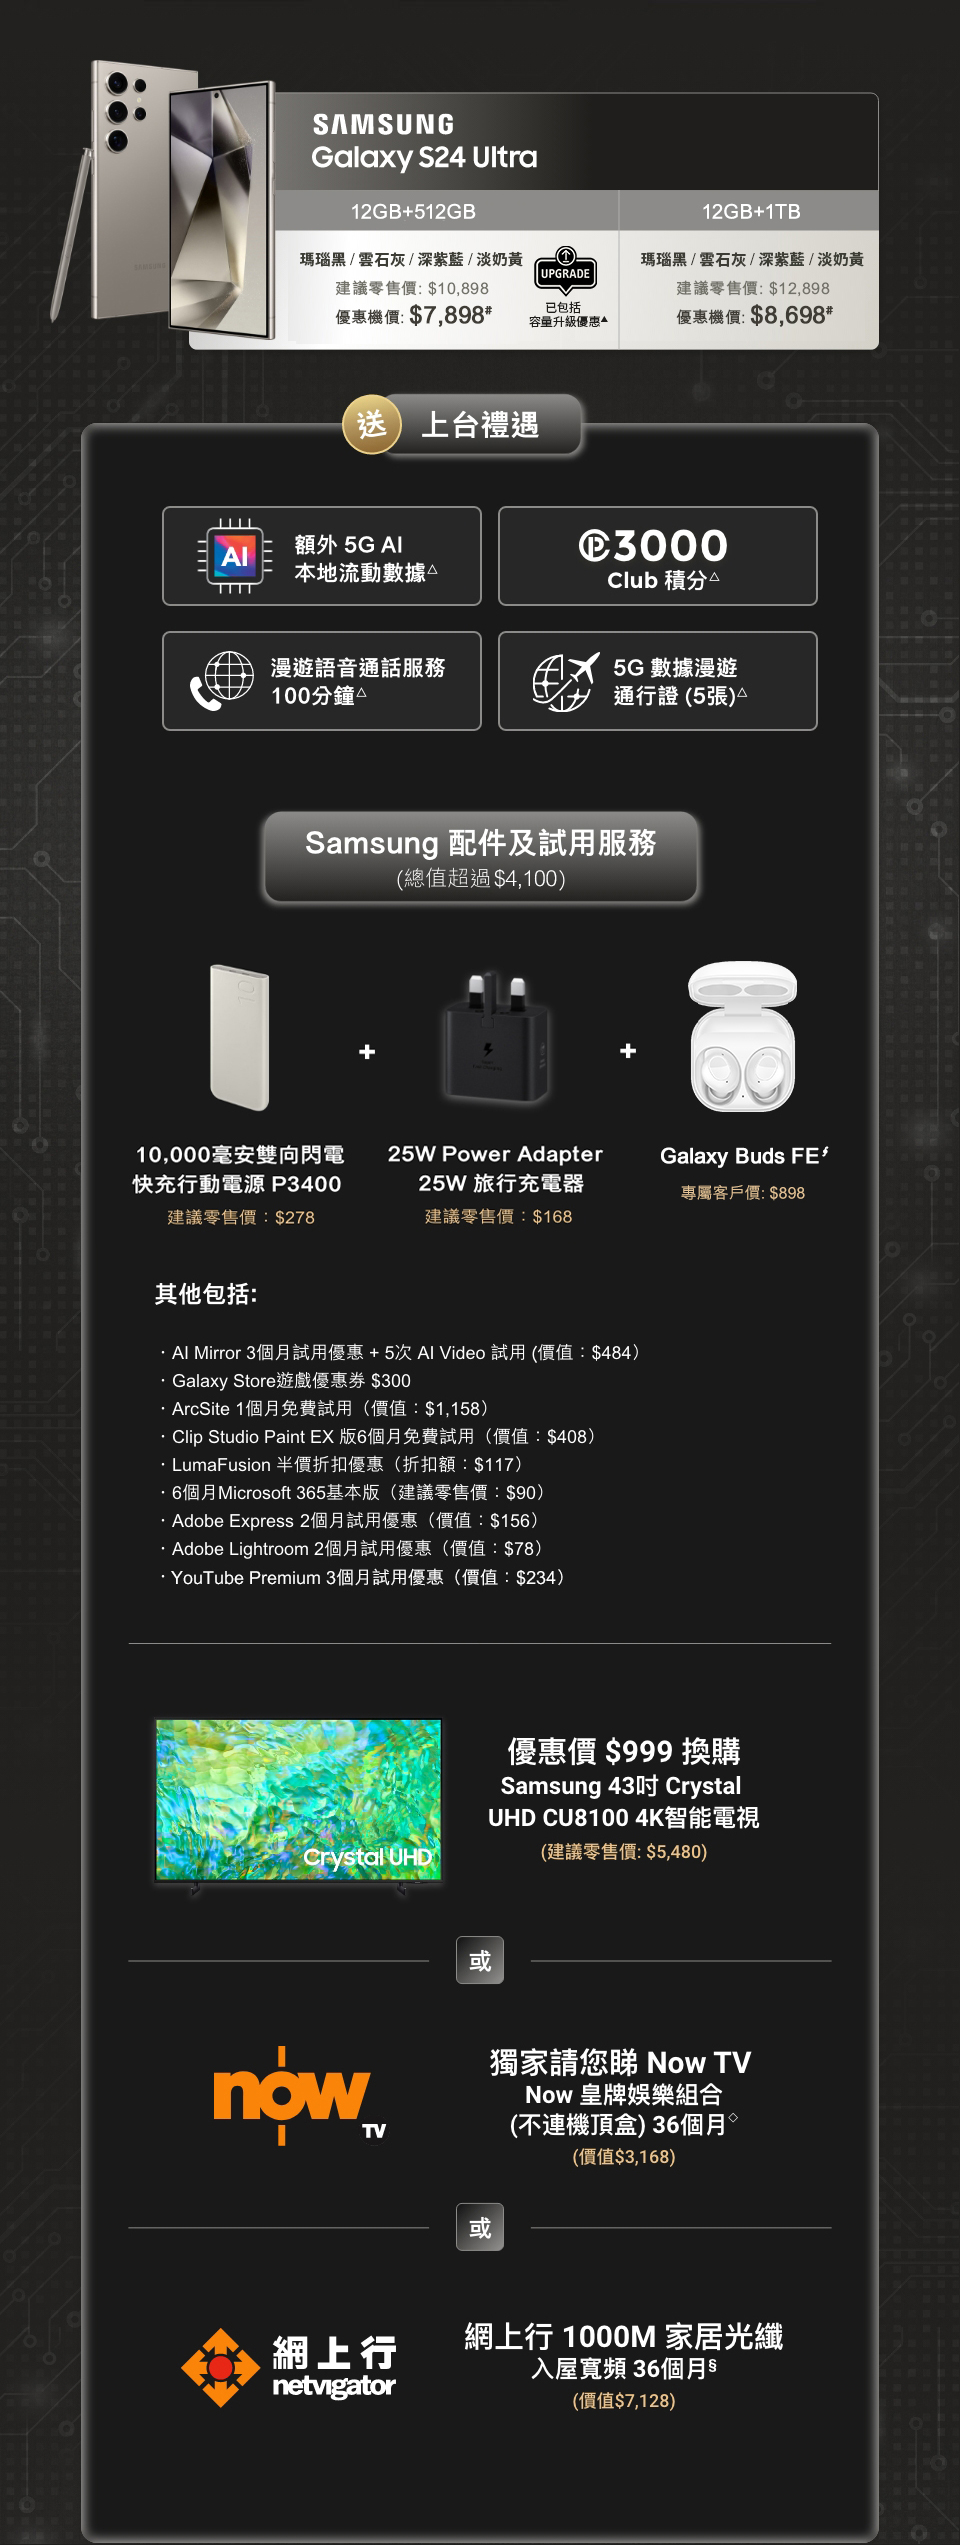 5G 客戶優惠 Galaxy S24 Ultra